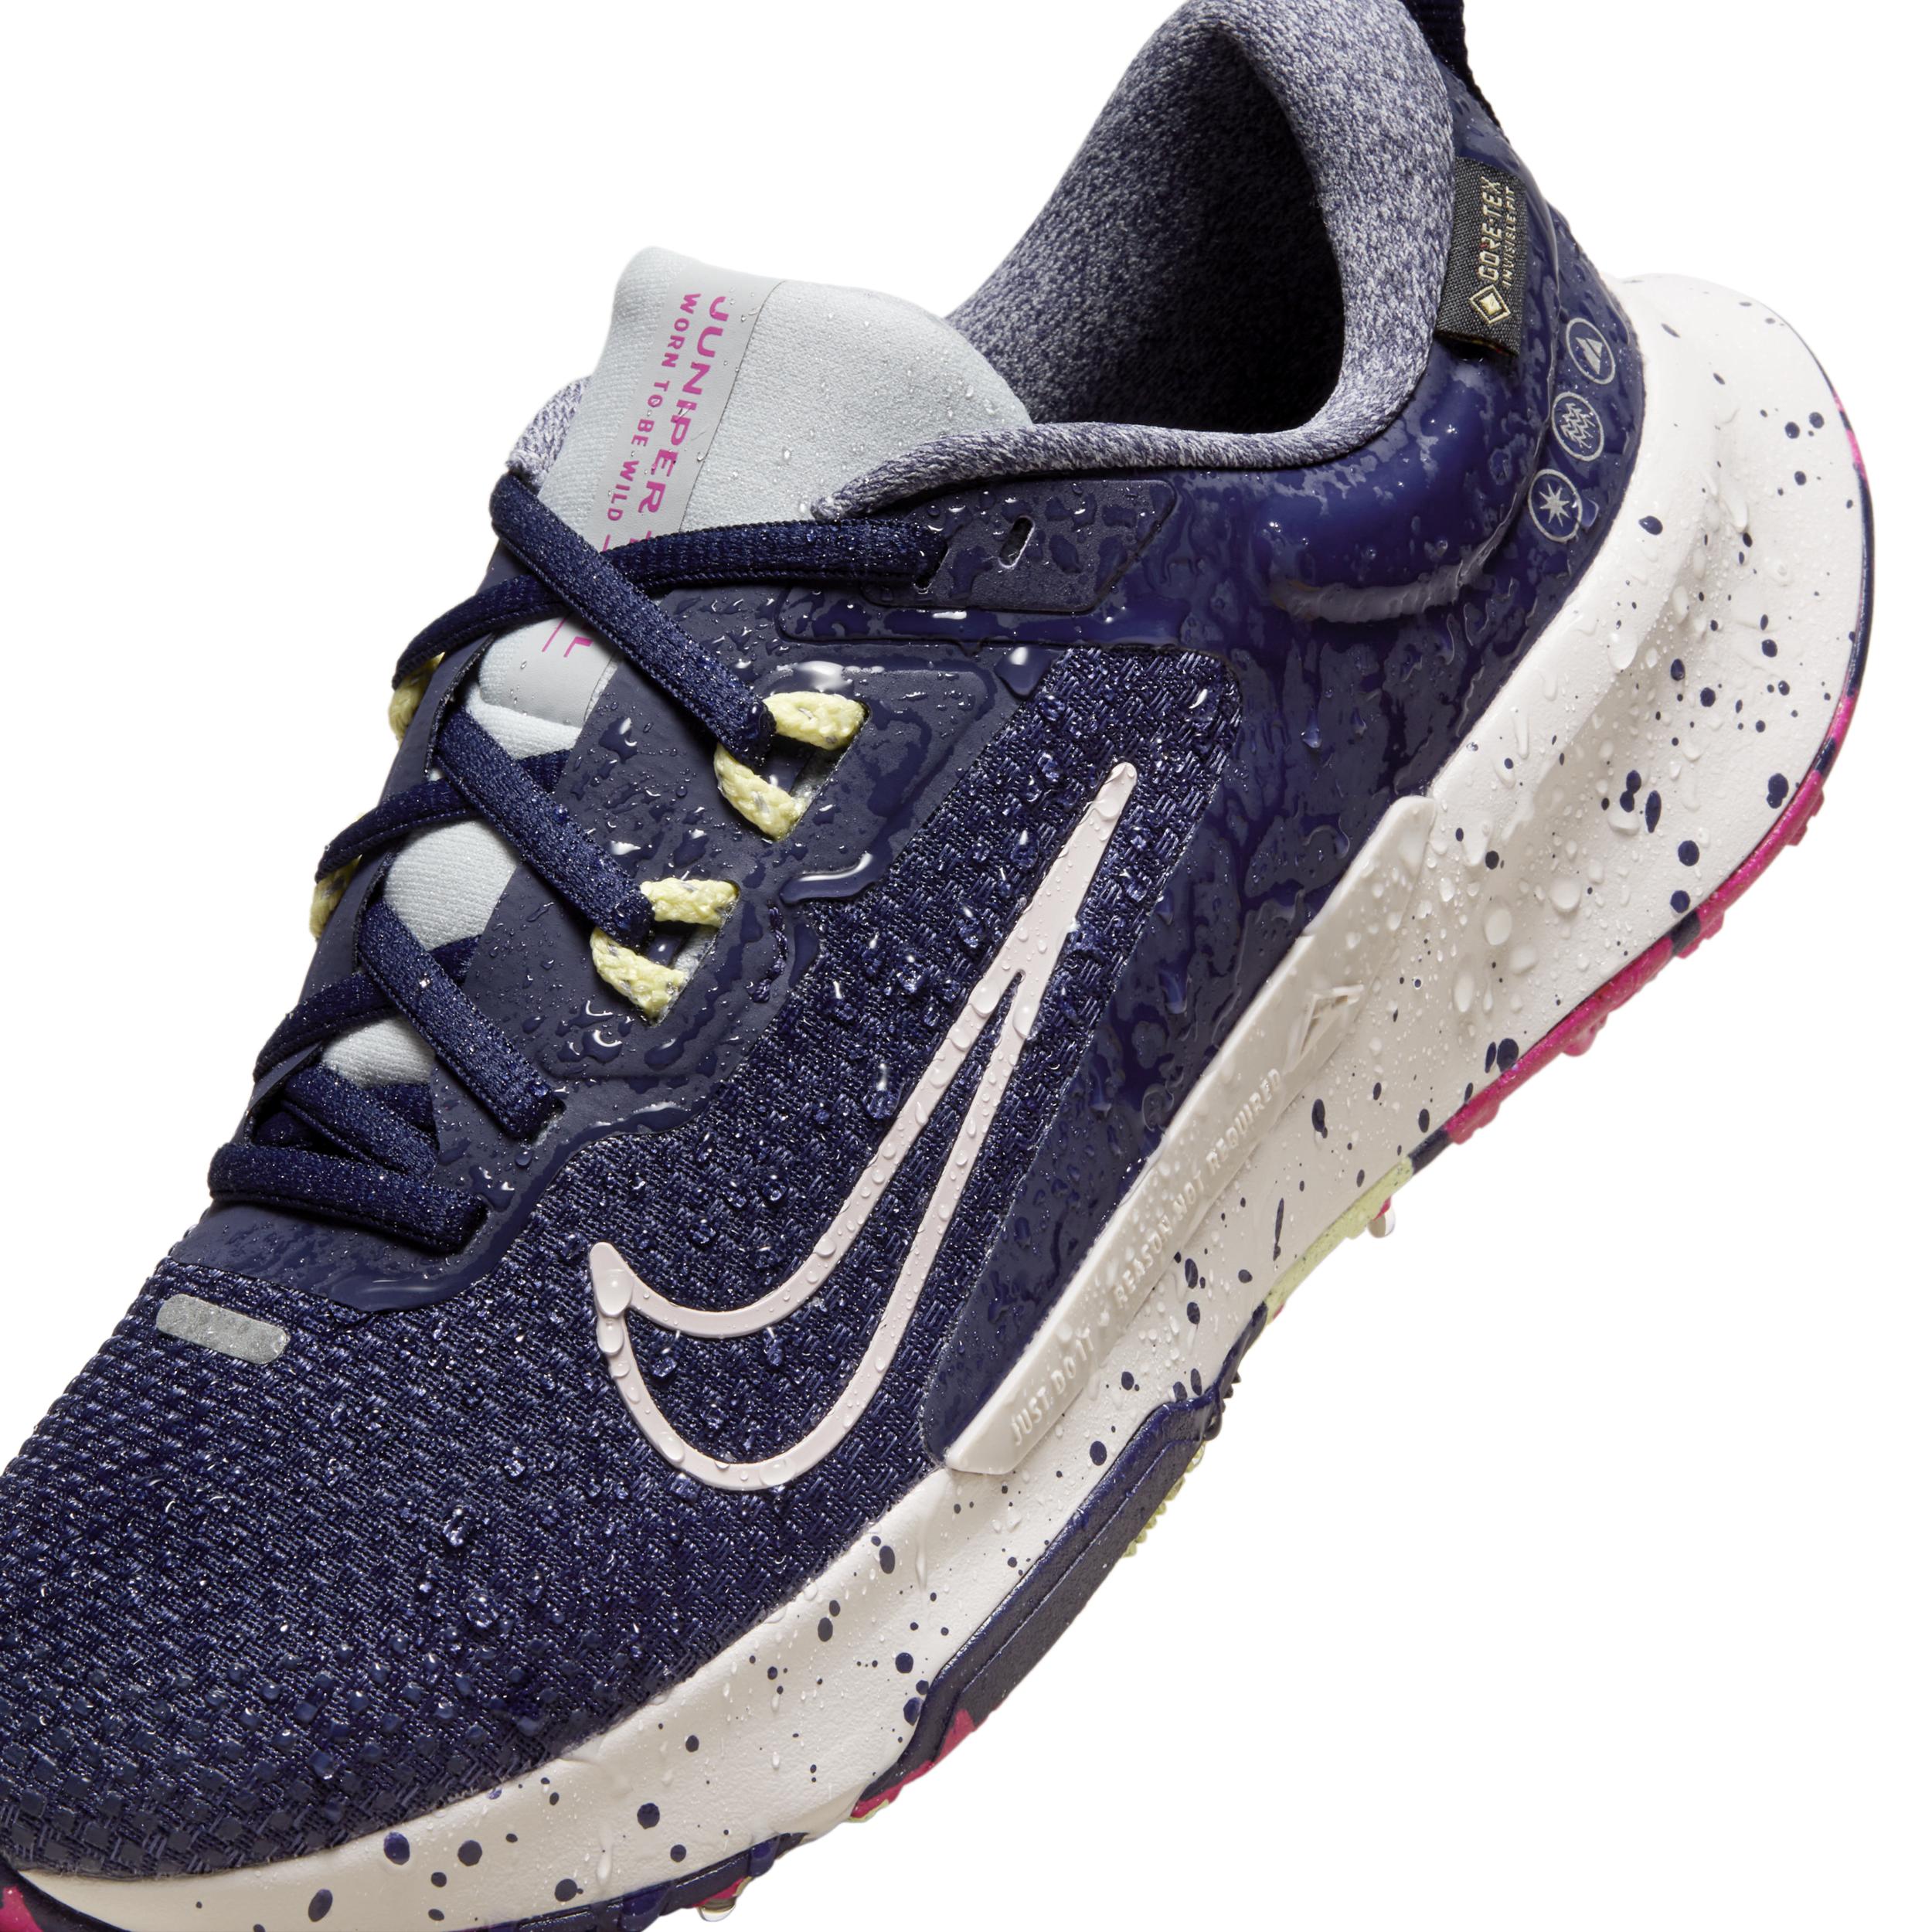 Nike Juniper Trail 2 Gore-tex Waterproof Trail-running Shoes in